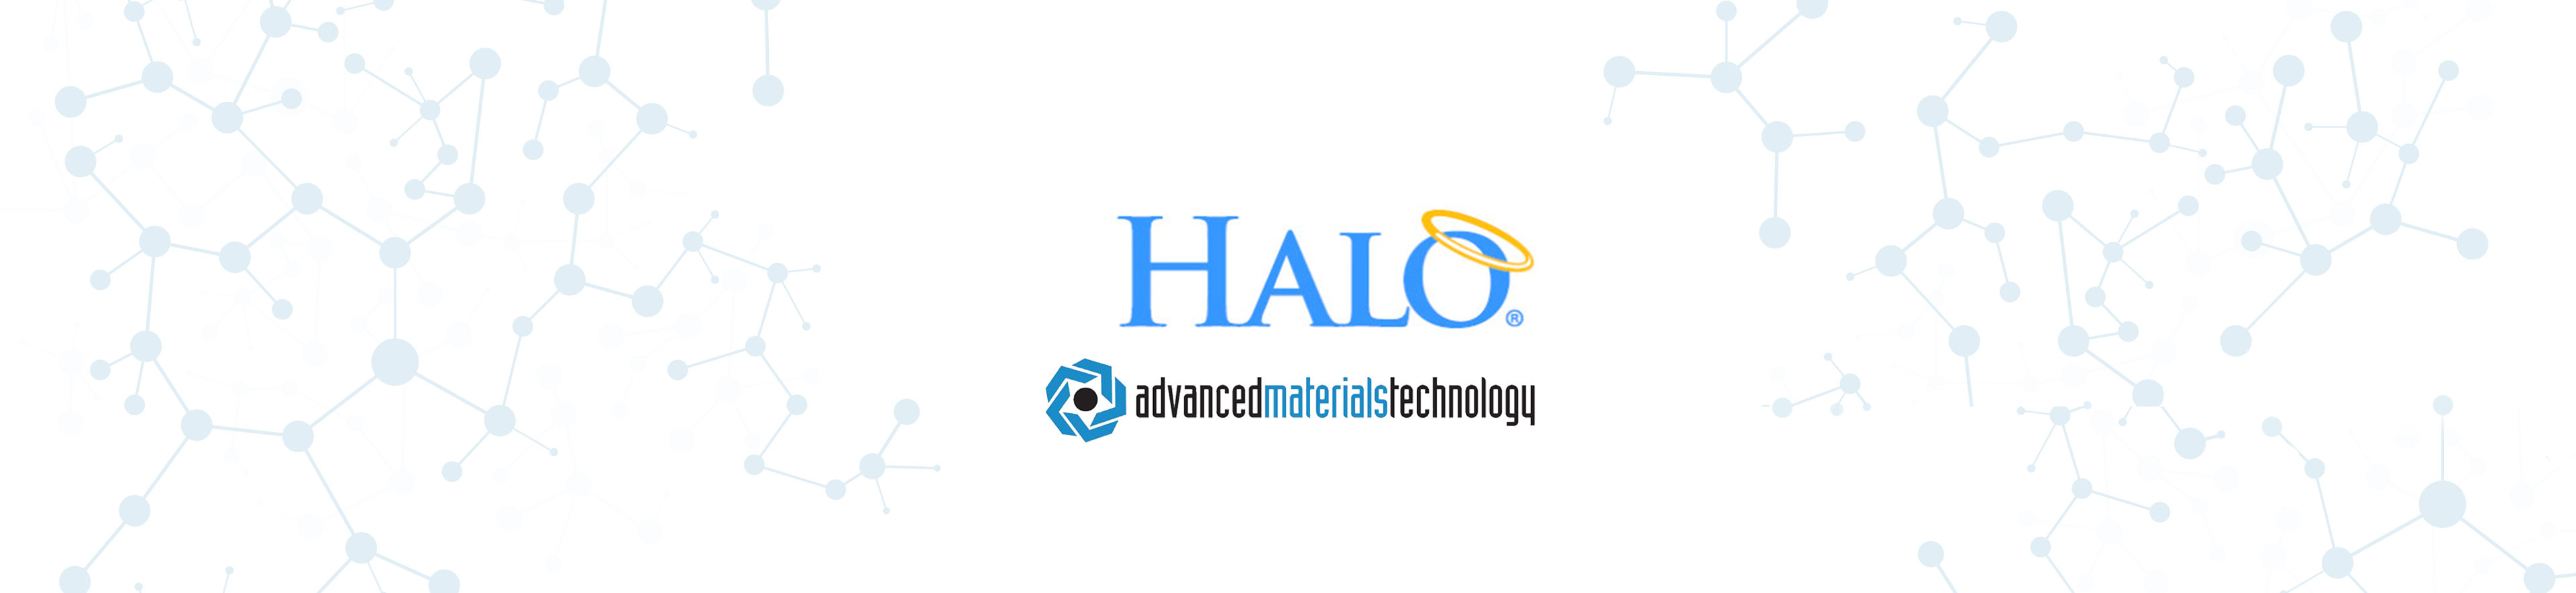 Advanced Materials Technology - HALO